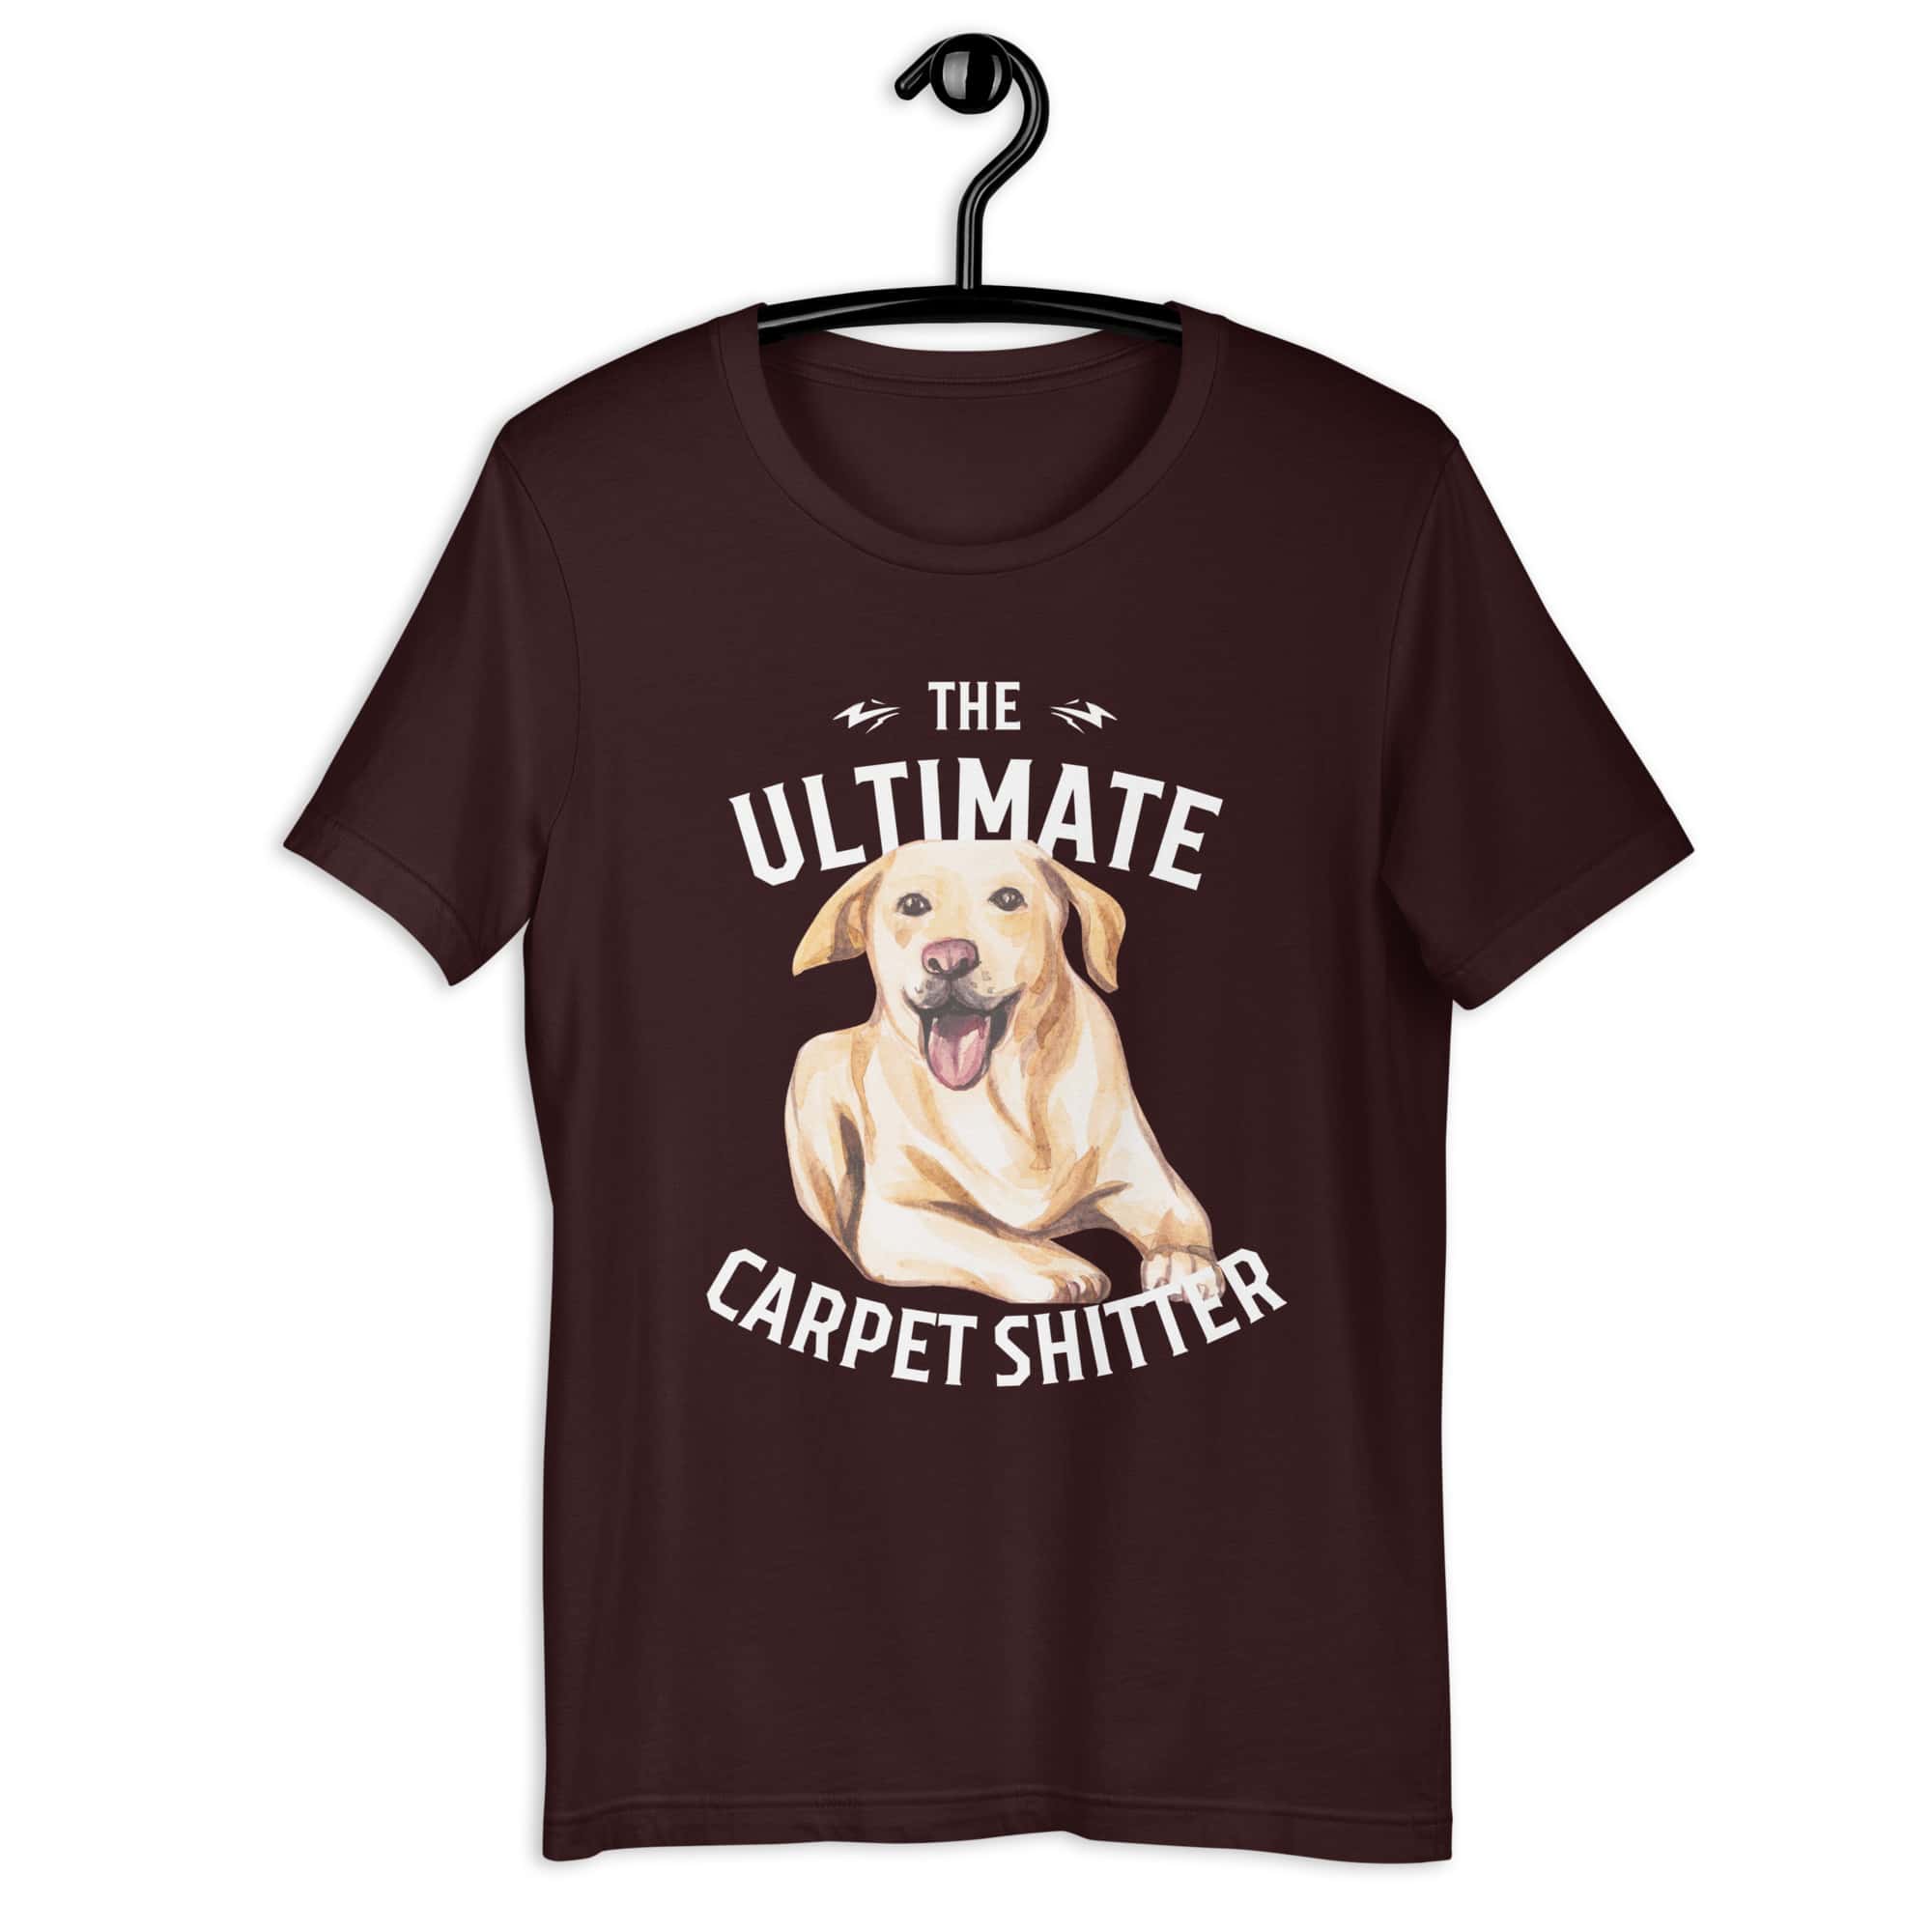 The Ultimate Carpet Shitter Funny Golden Retriever Unisex T-Shirt brown